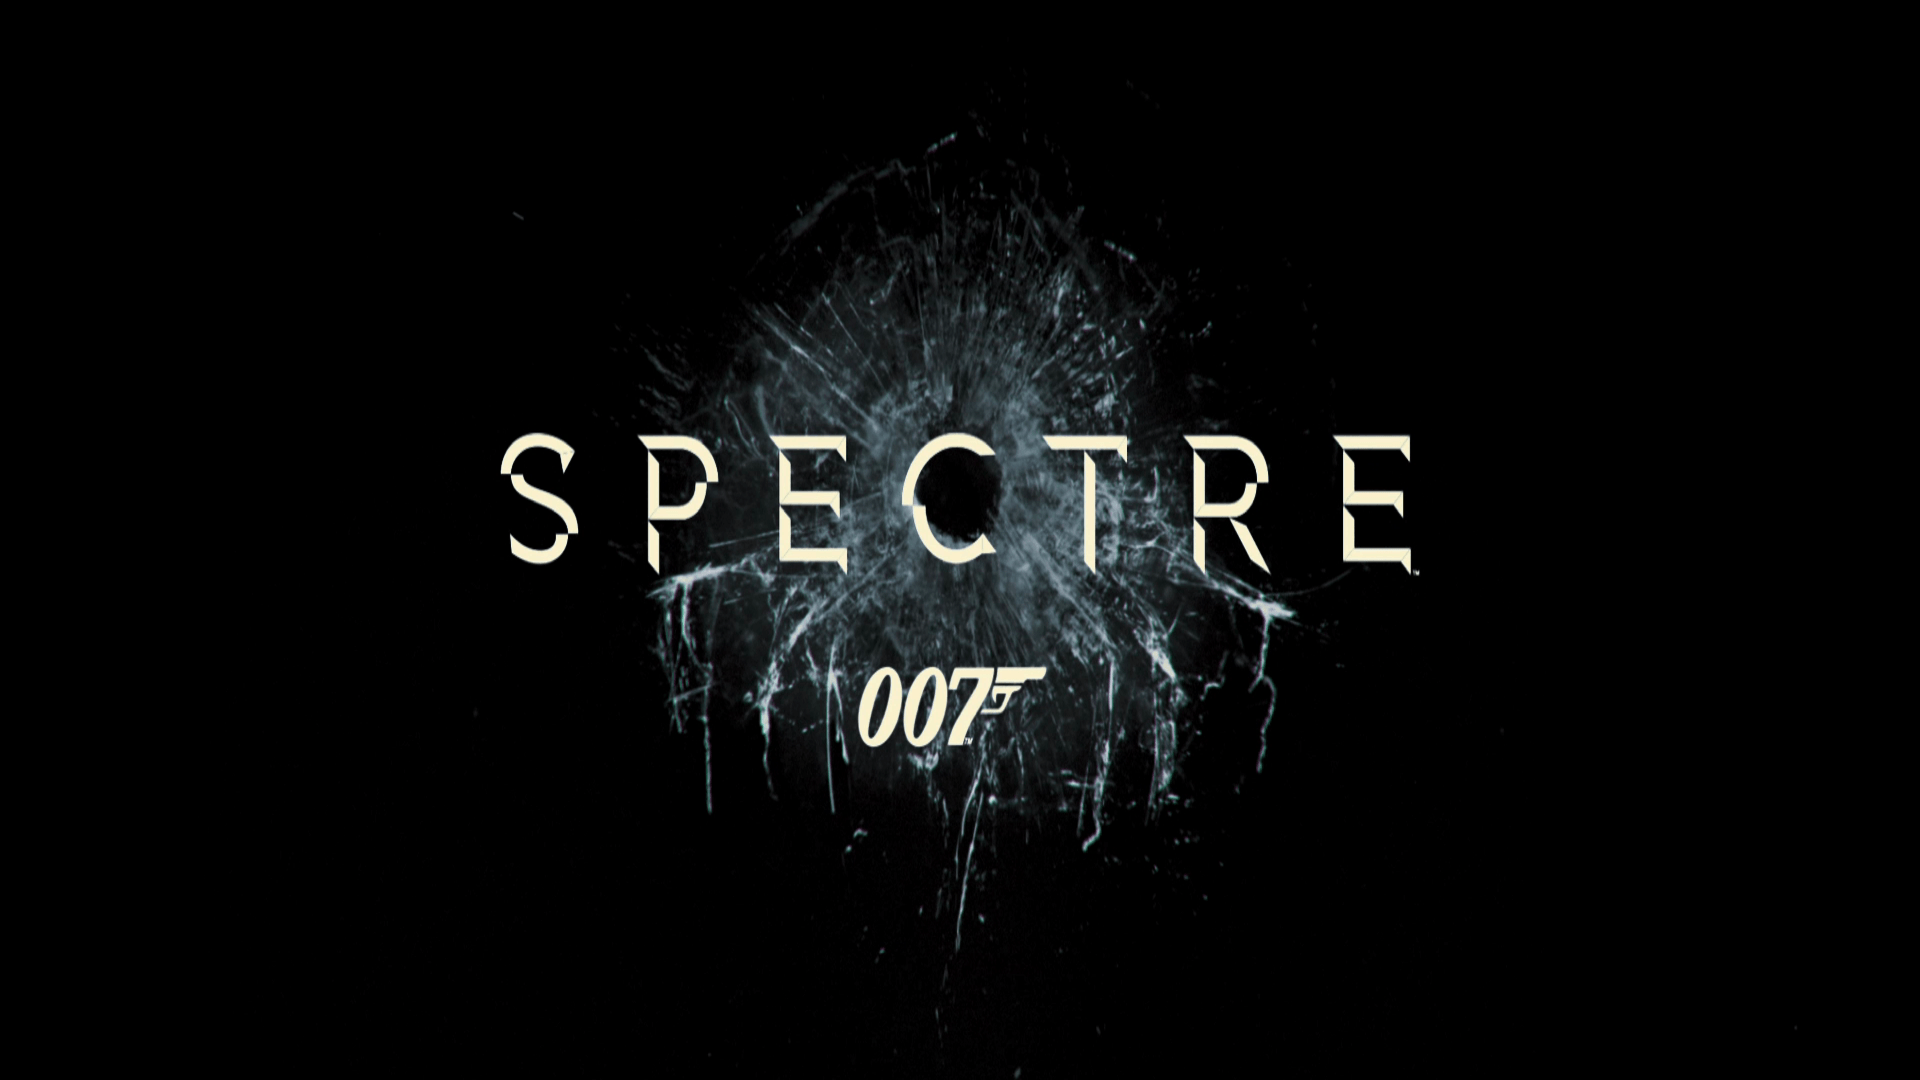 stream spectre online freenline free